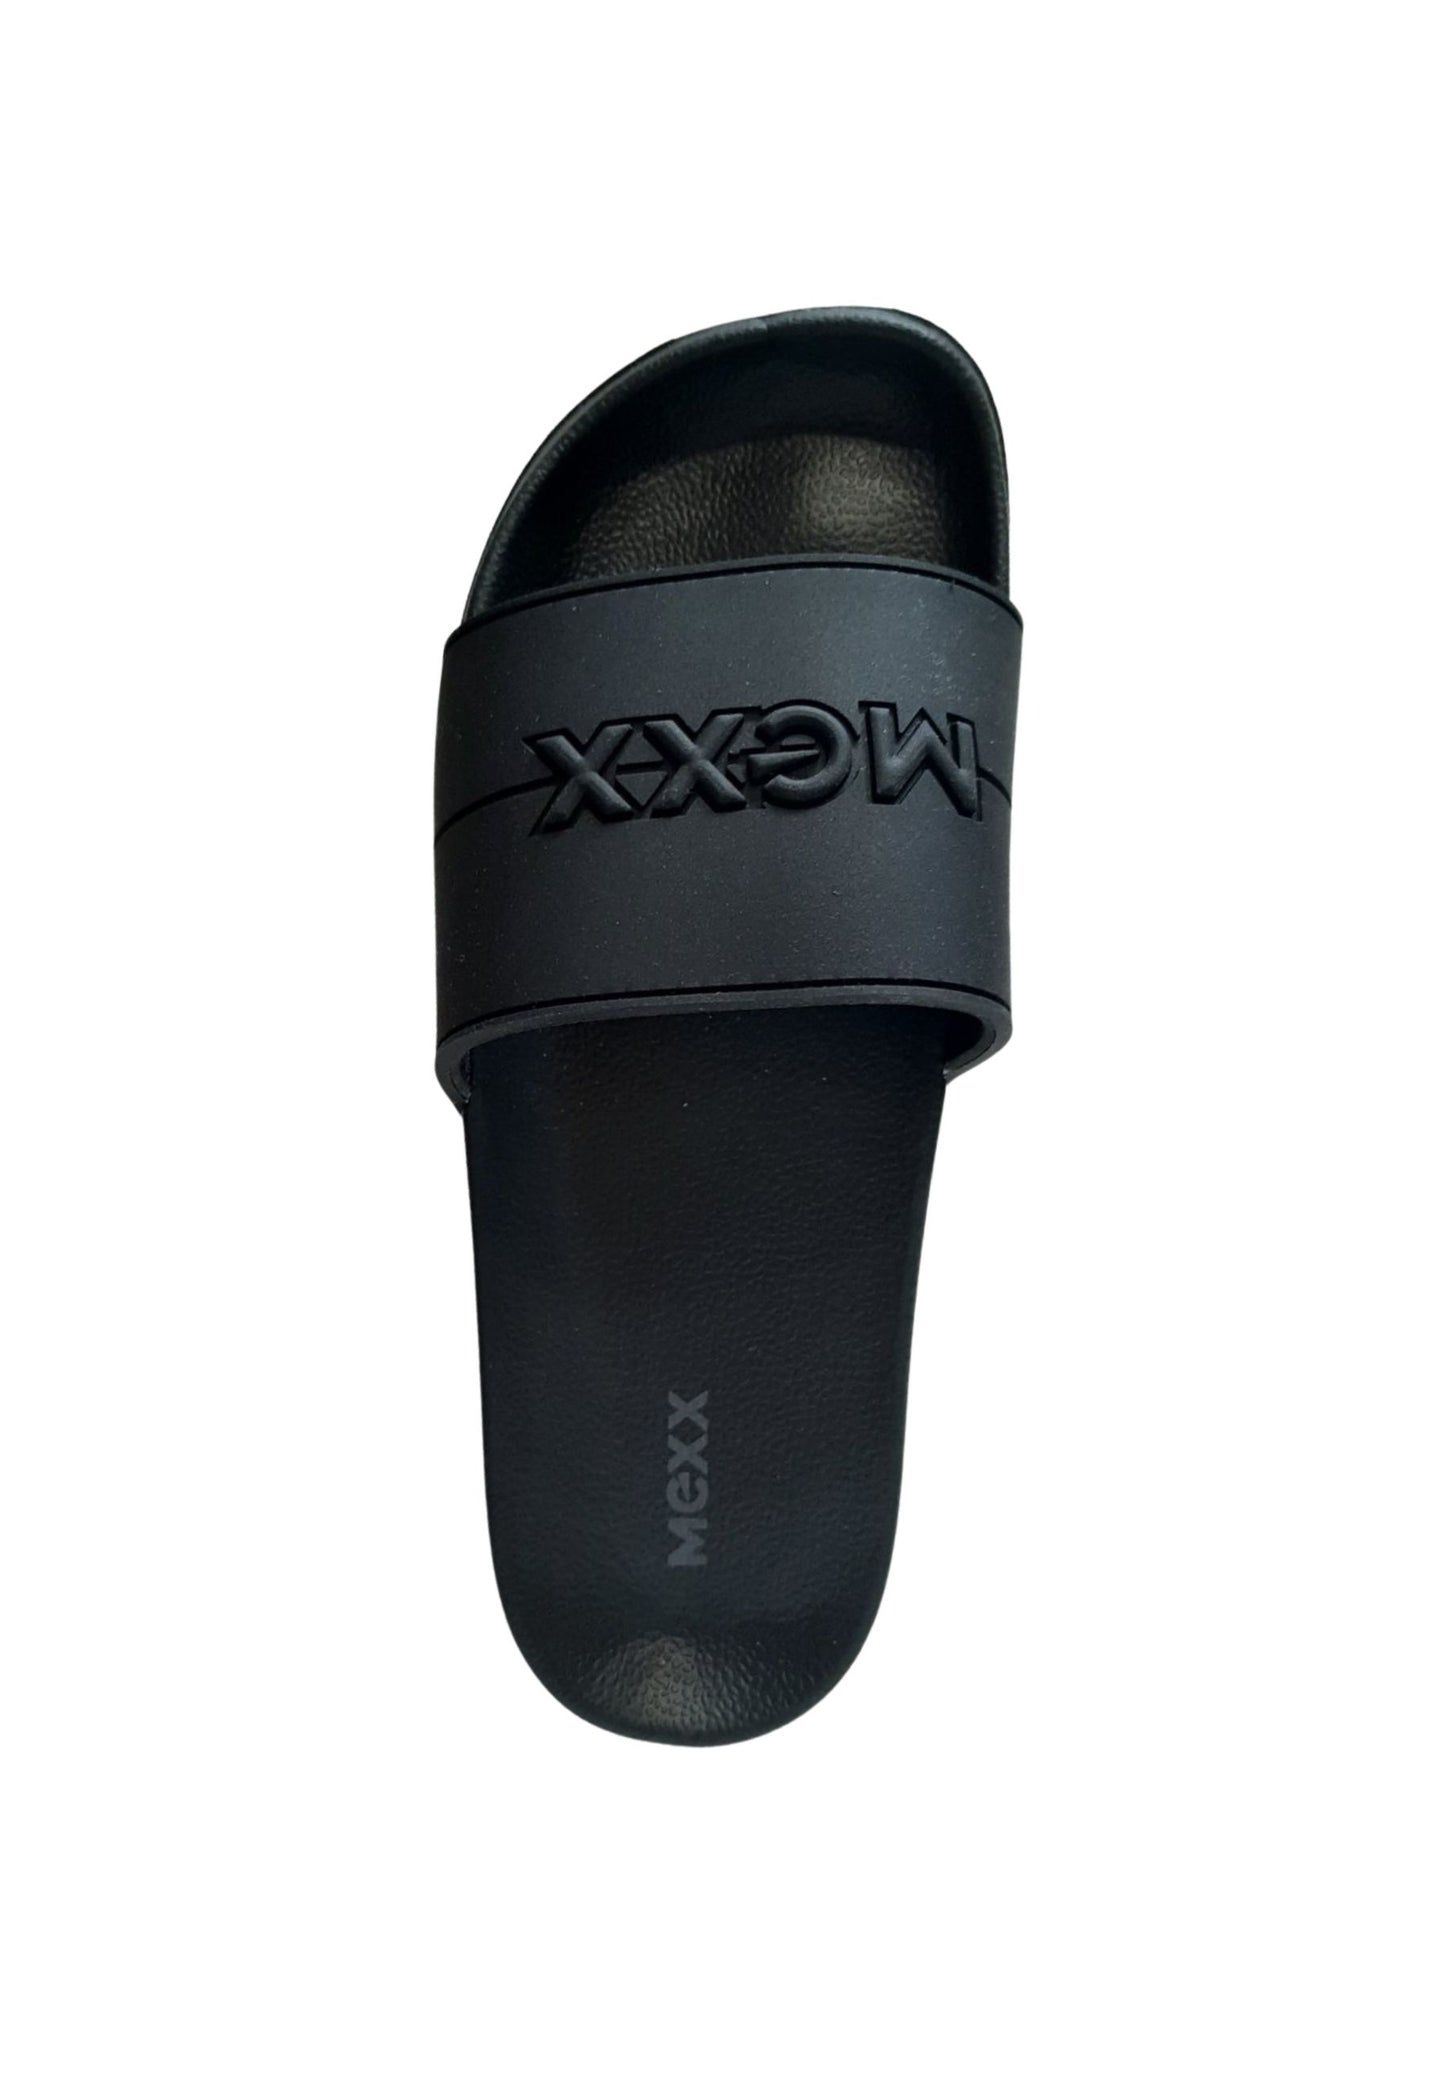 Mexx Women's Slippers